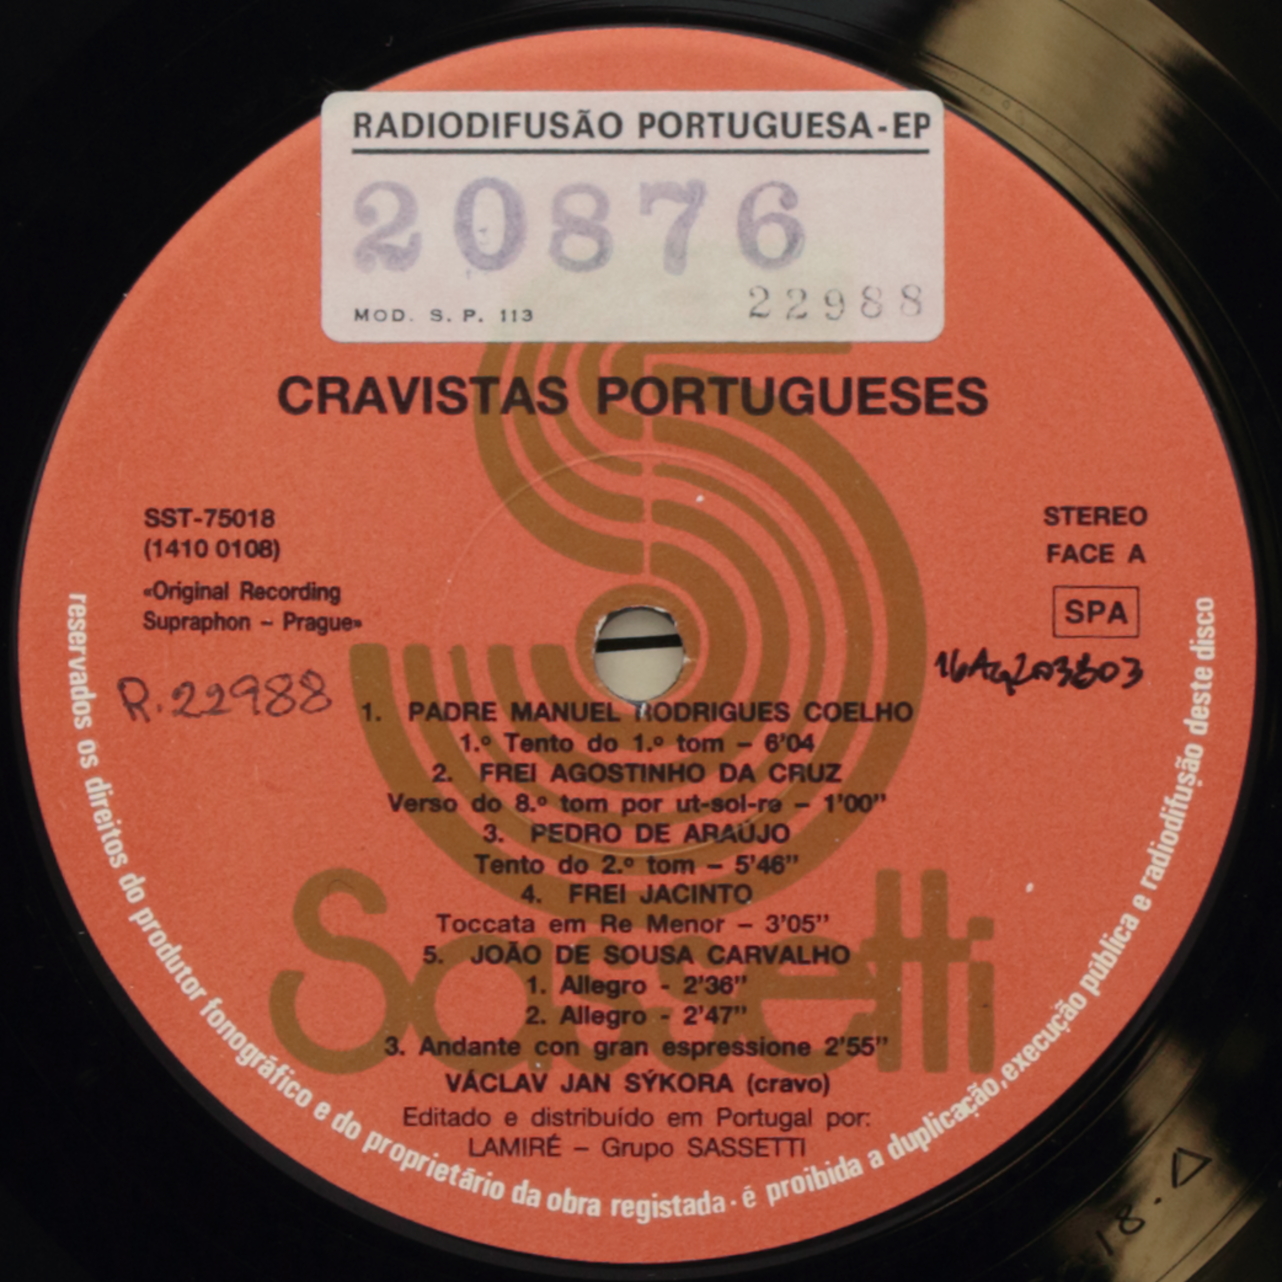 Cravistas portugueses